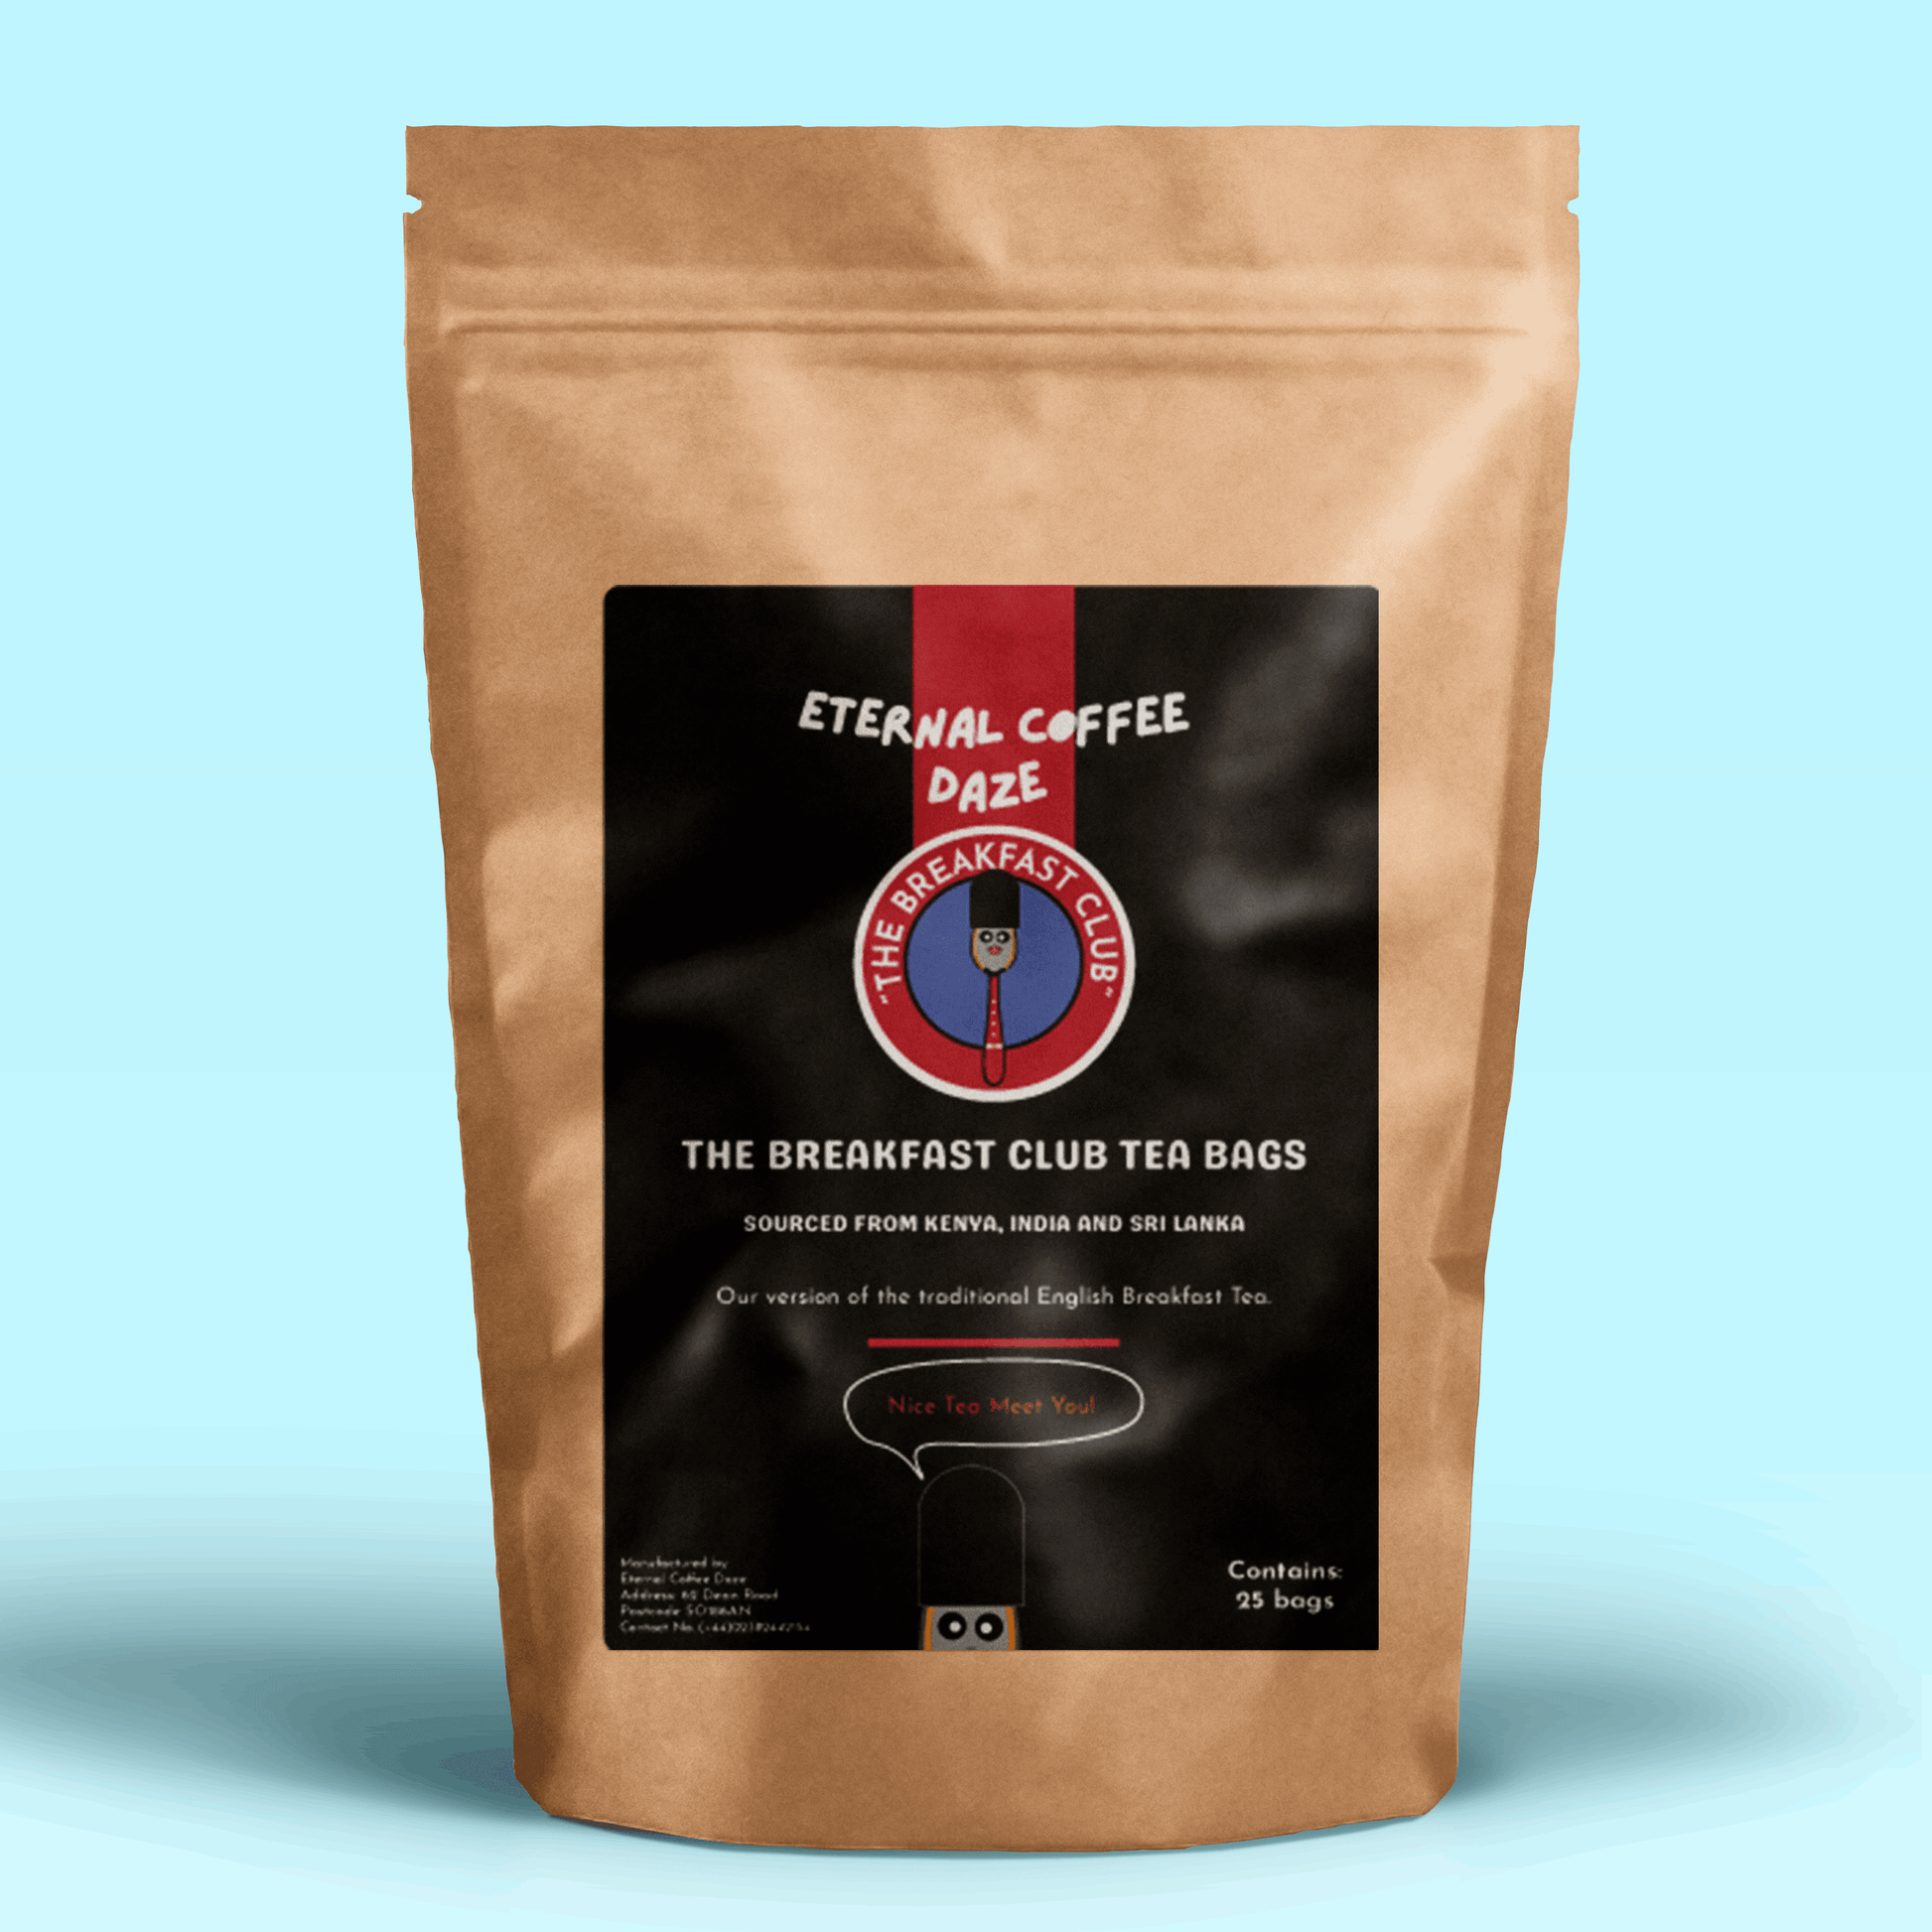 The Breakfast Club Tea Bags - Eternal Coffee Daze